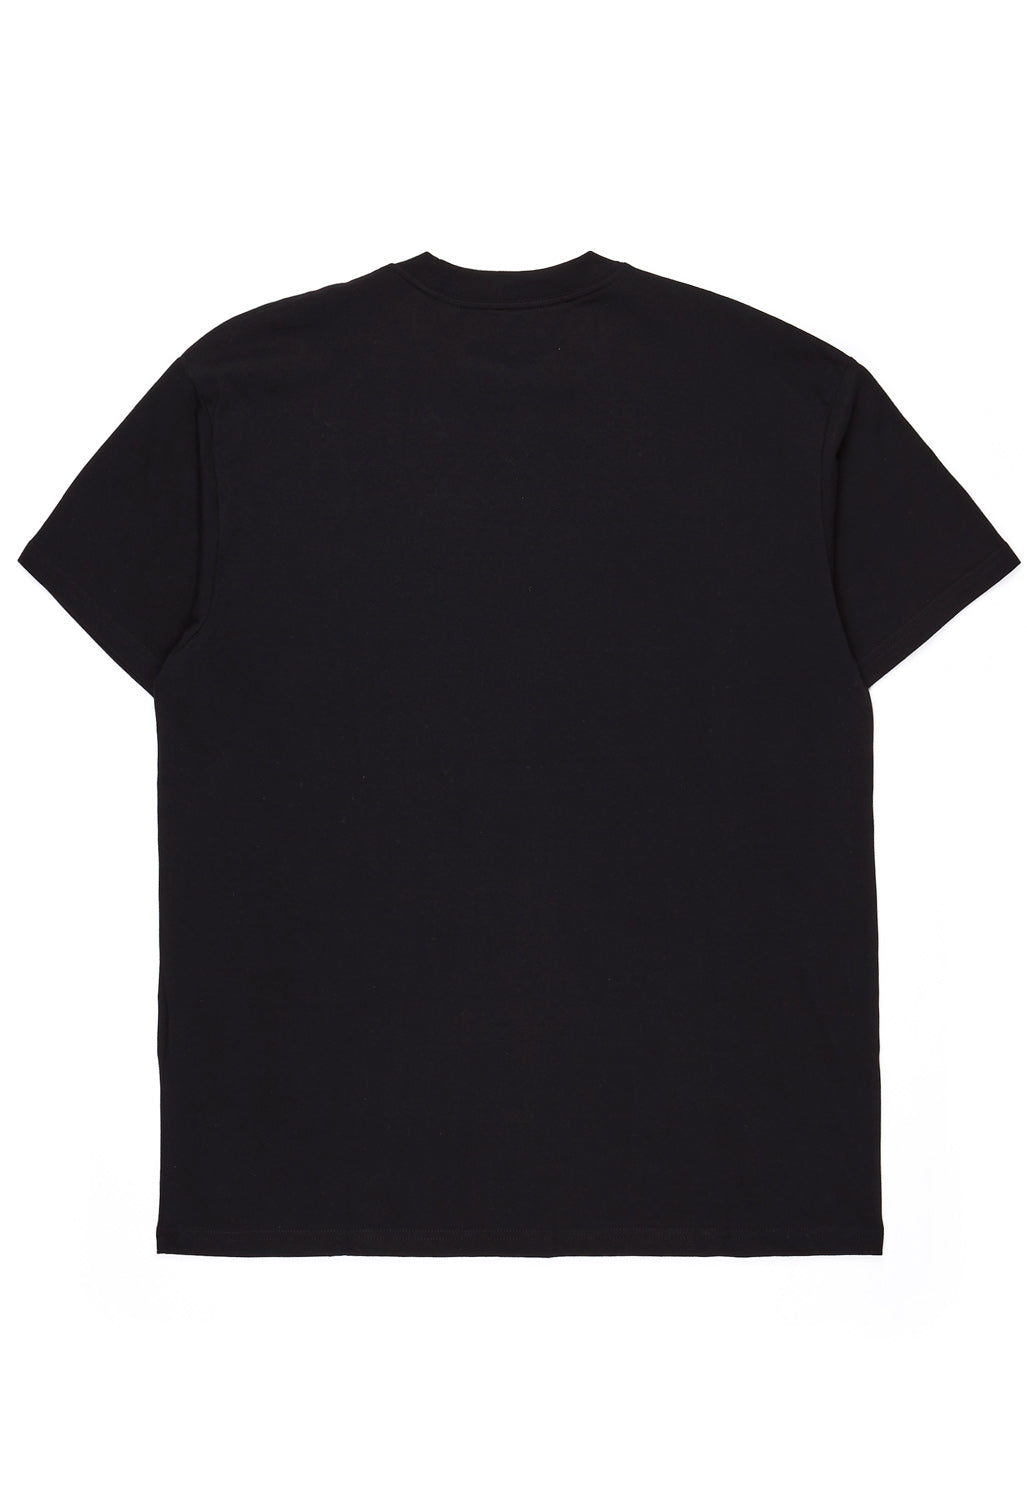 Carhartt WIP Men's Ollie Mac Icy Lake T-Shirt - Black